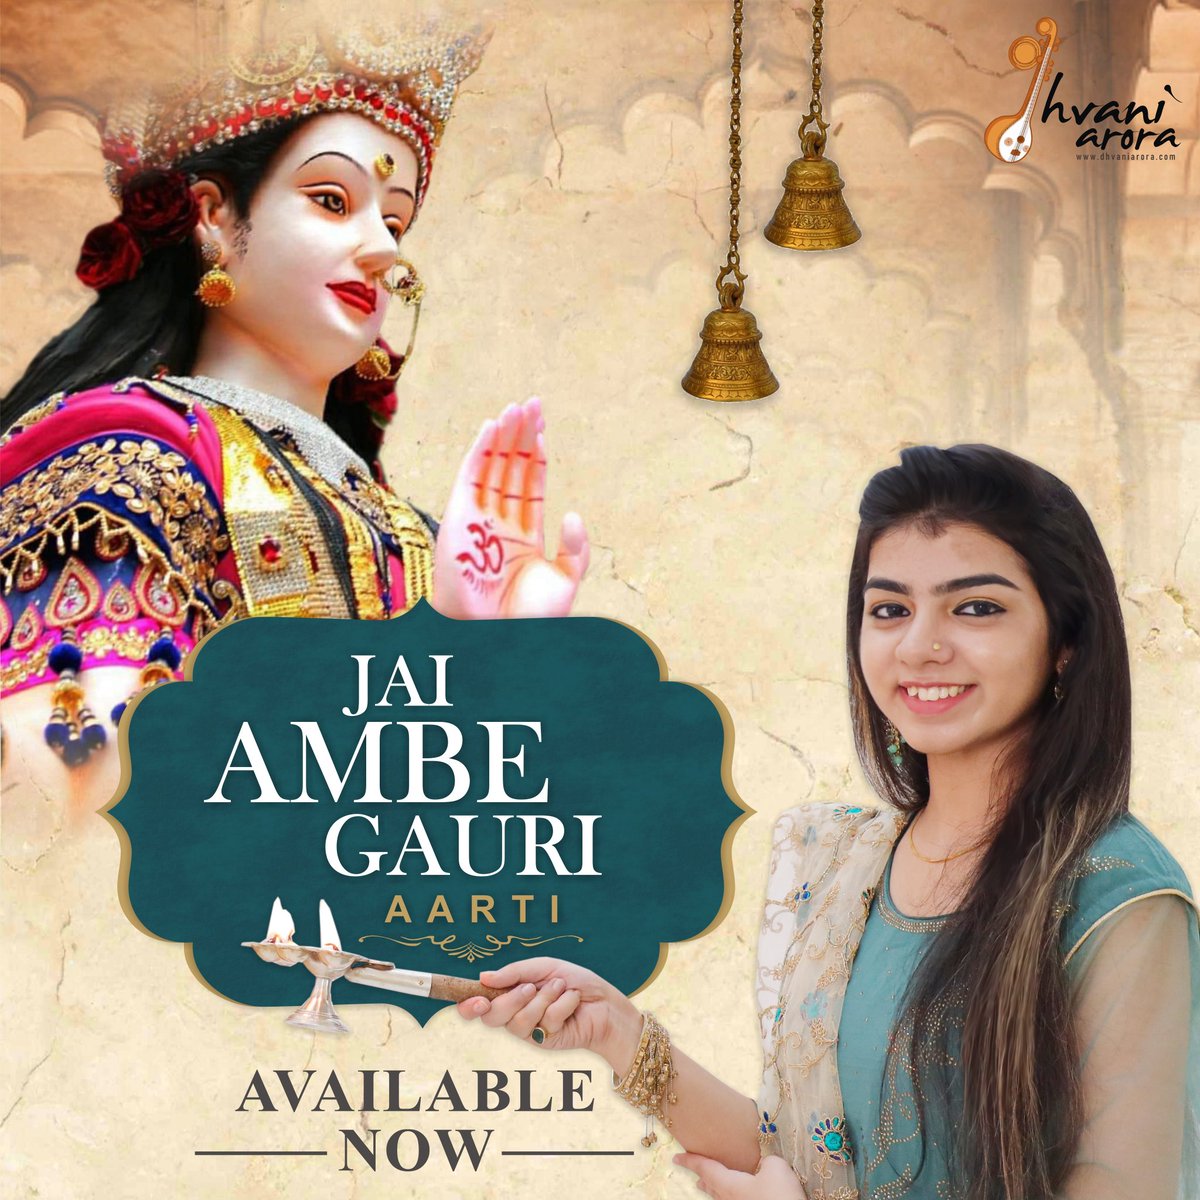 youtu.be/a_z5pgVi0Ik

Go to the link to watch this beautiful Aarti - Jai Ambe Gauri!! 
#jaiambegauri #aarti #available #youtube #dhvaniarora